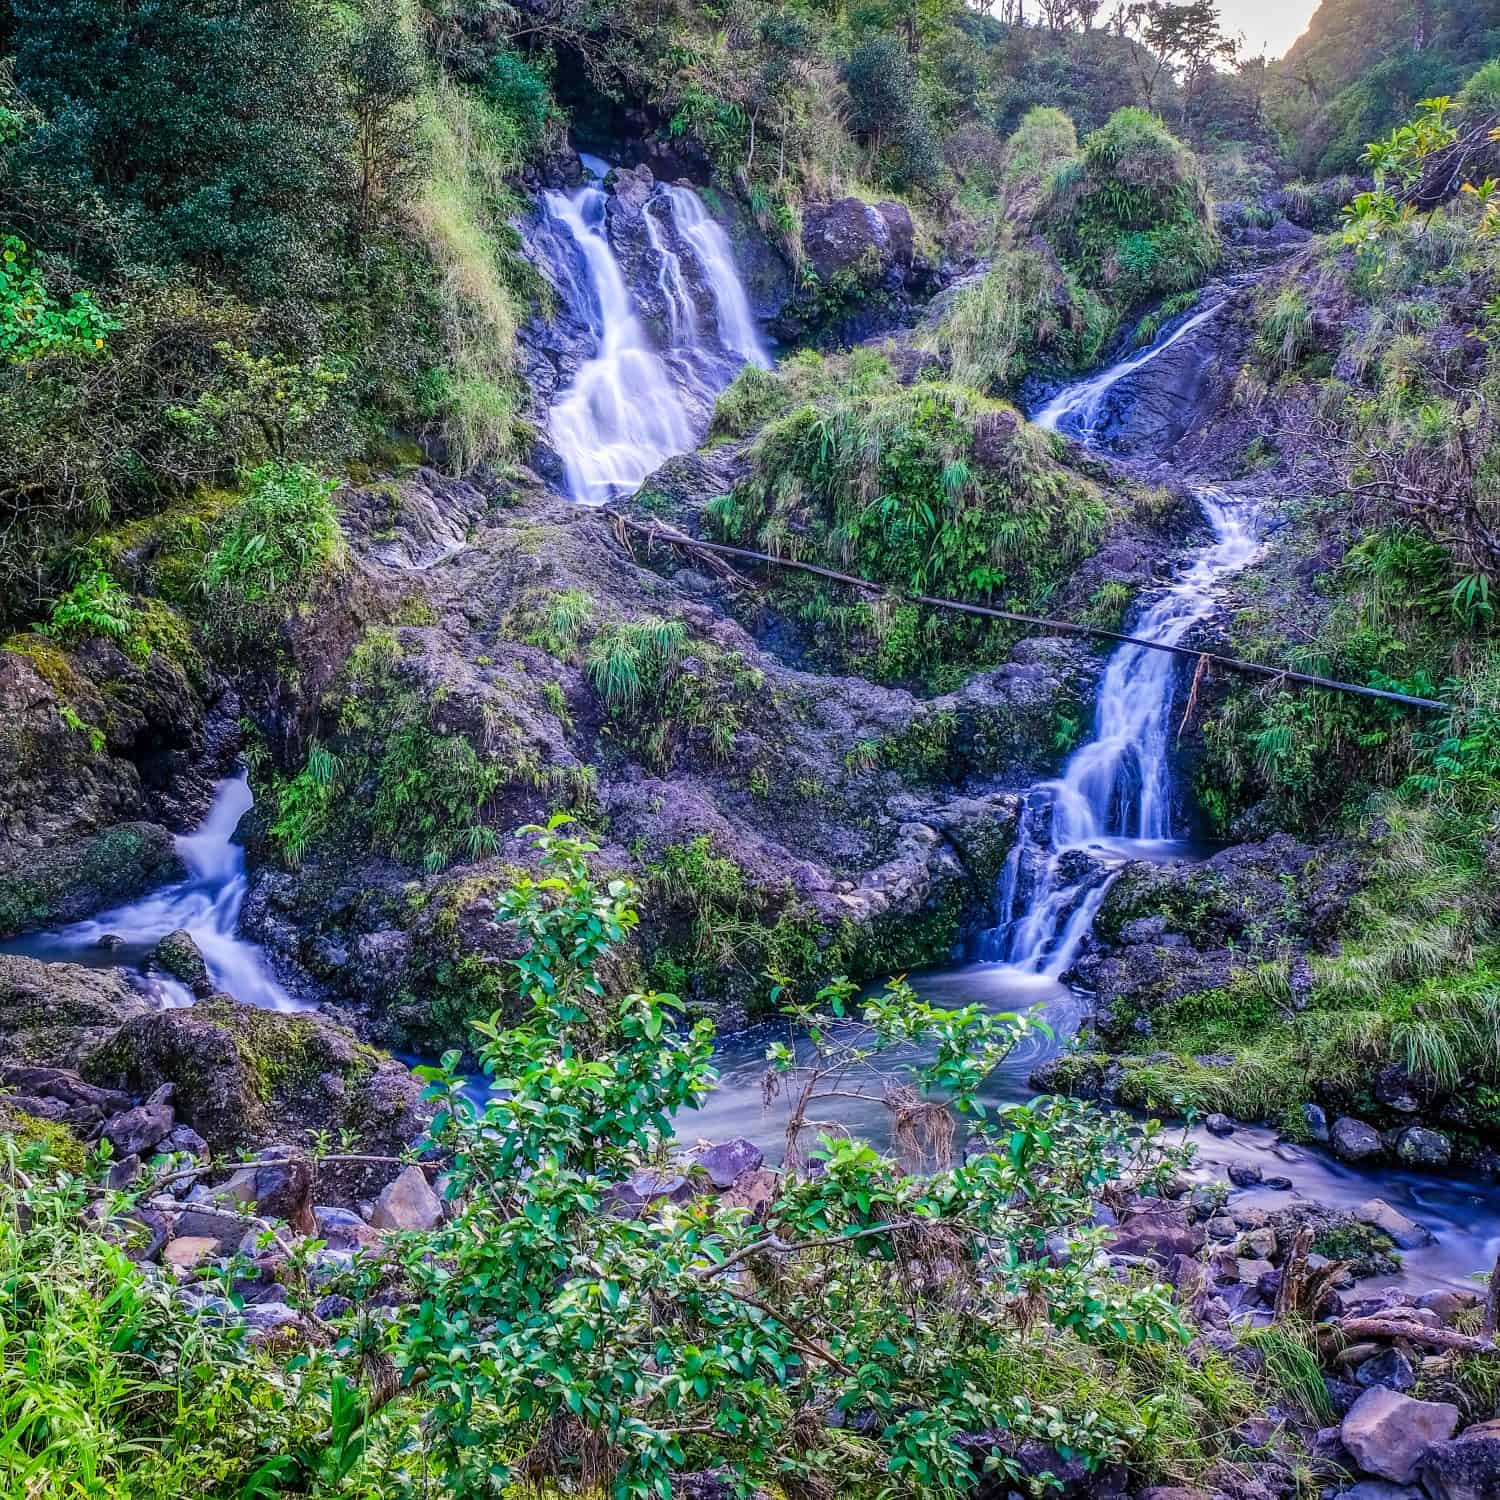 The beautiful Hanawi Falls waterfall on the Road to Hana on Maui, Hawaii, with lush vegetation covering lava rock.